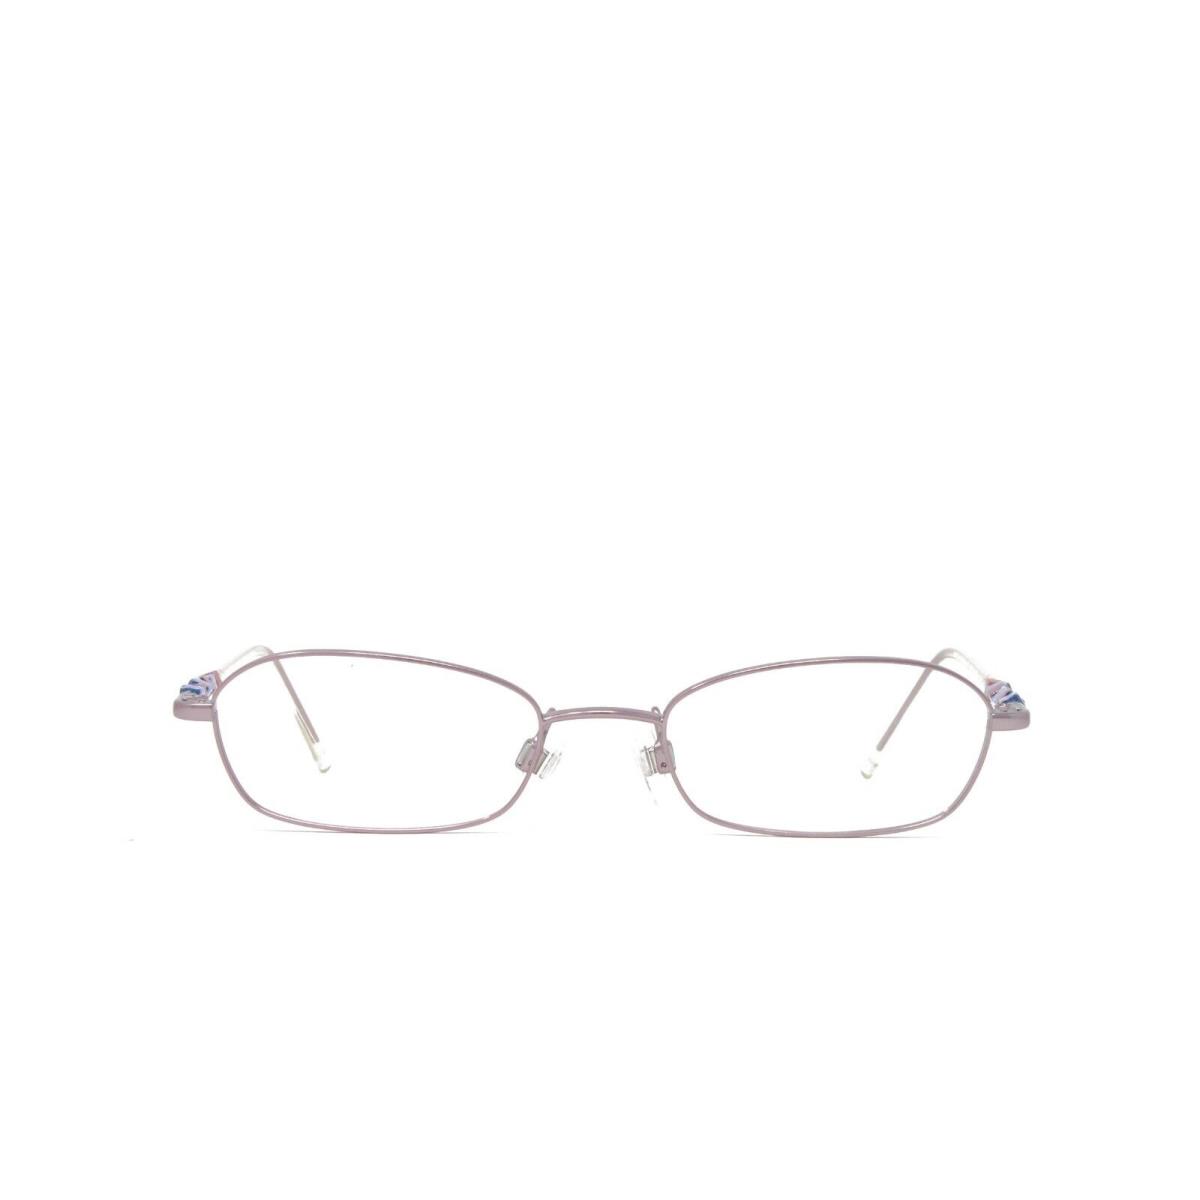 Michael Kors Eyeglasses MK18025 PK Pink /50mm Demo Lens